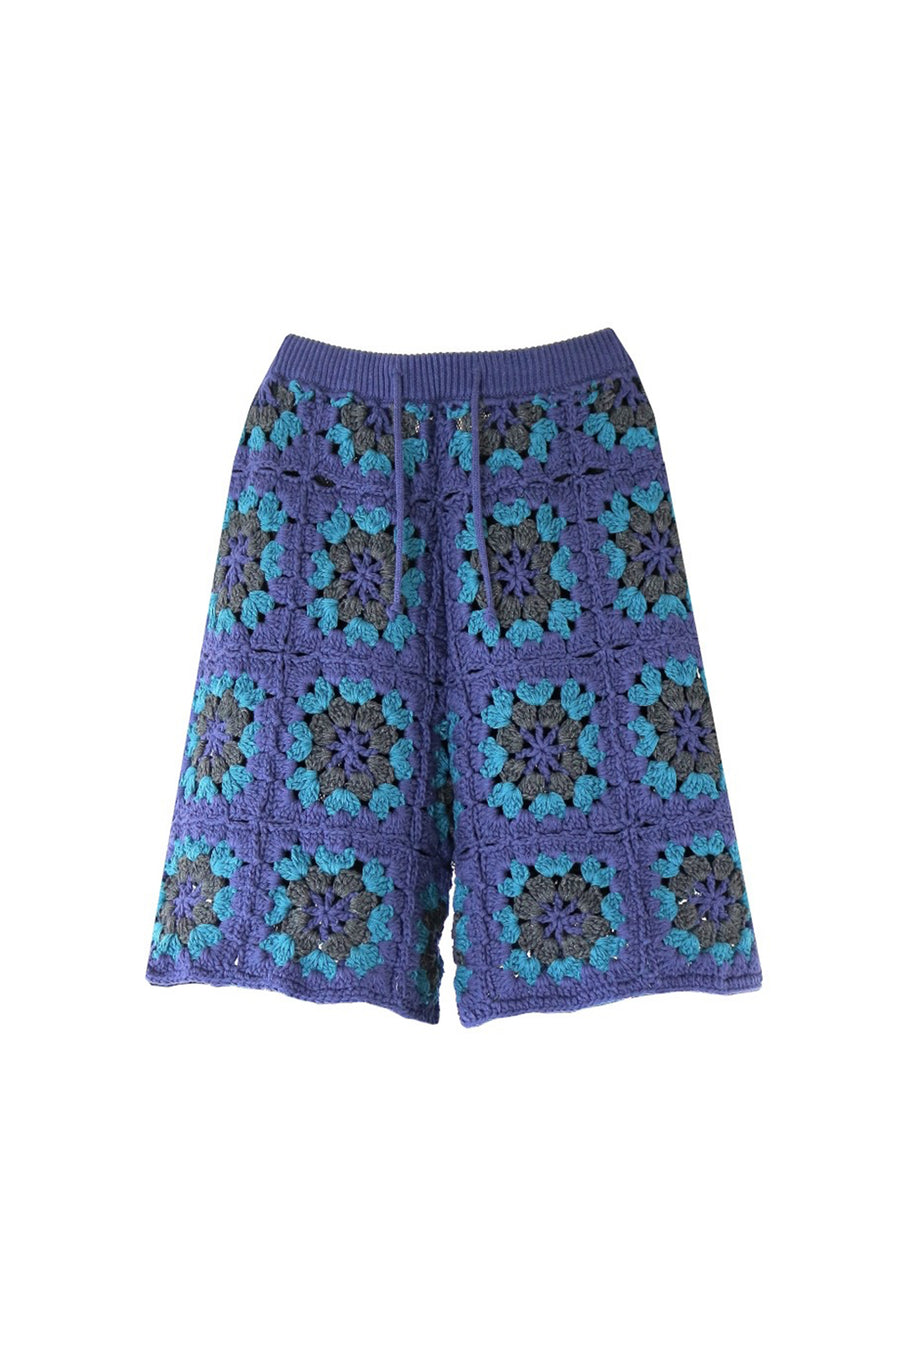 elephant TRIBAL fabrics  Crochet Knit Bermuda Shorts(TURQUOISE NAVY)